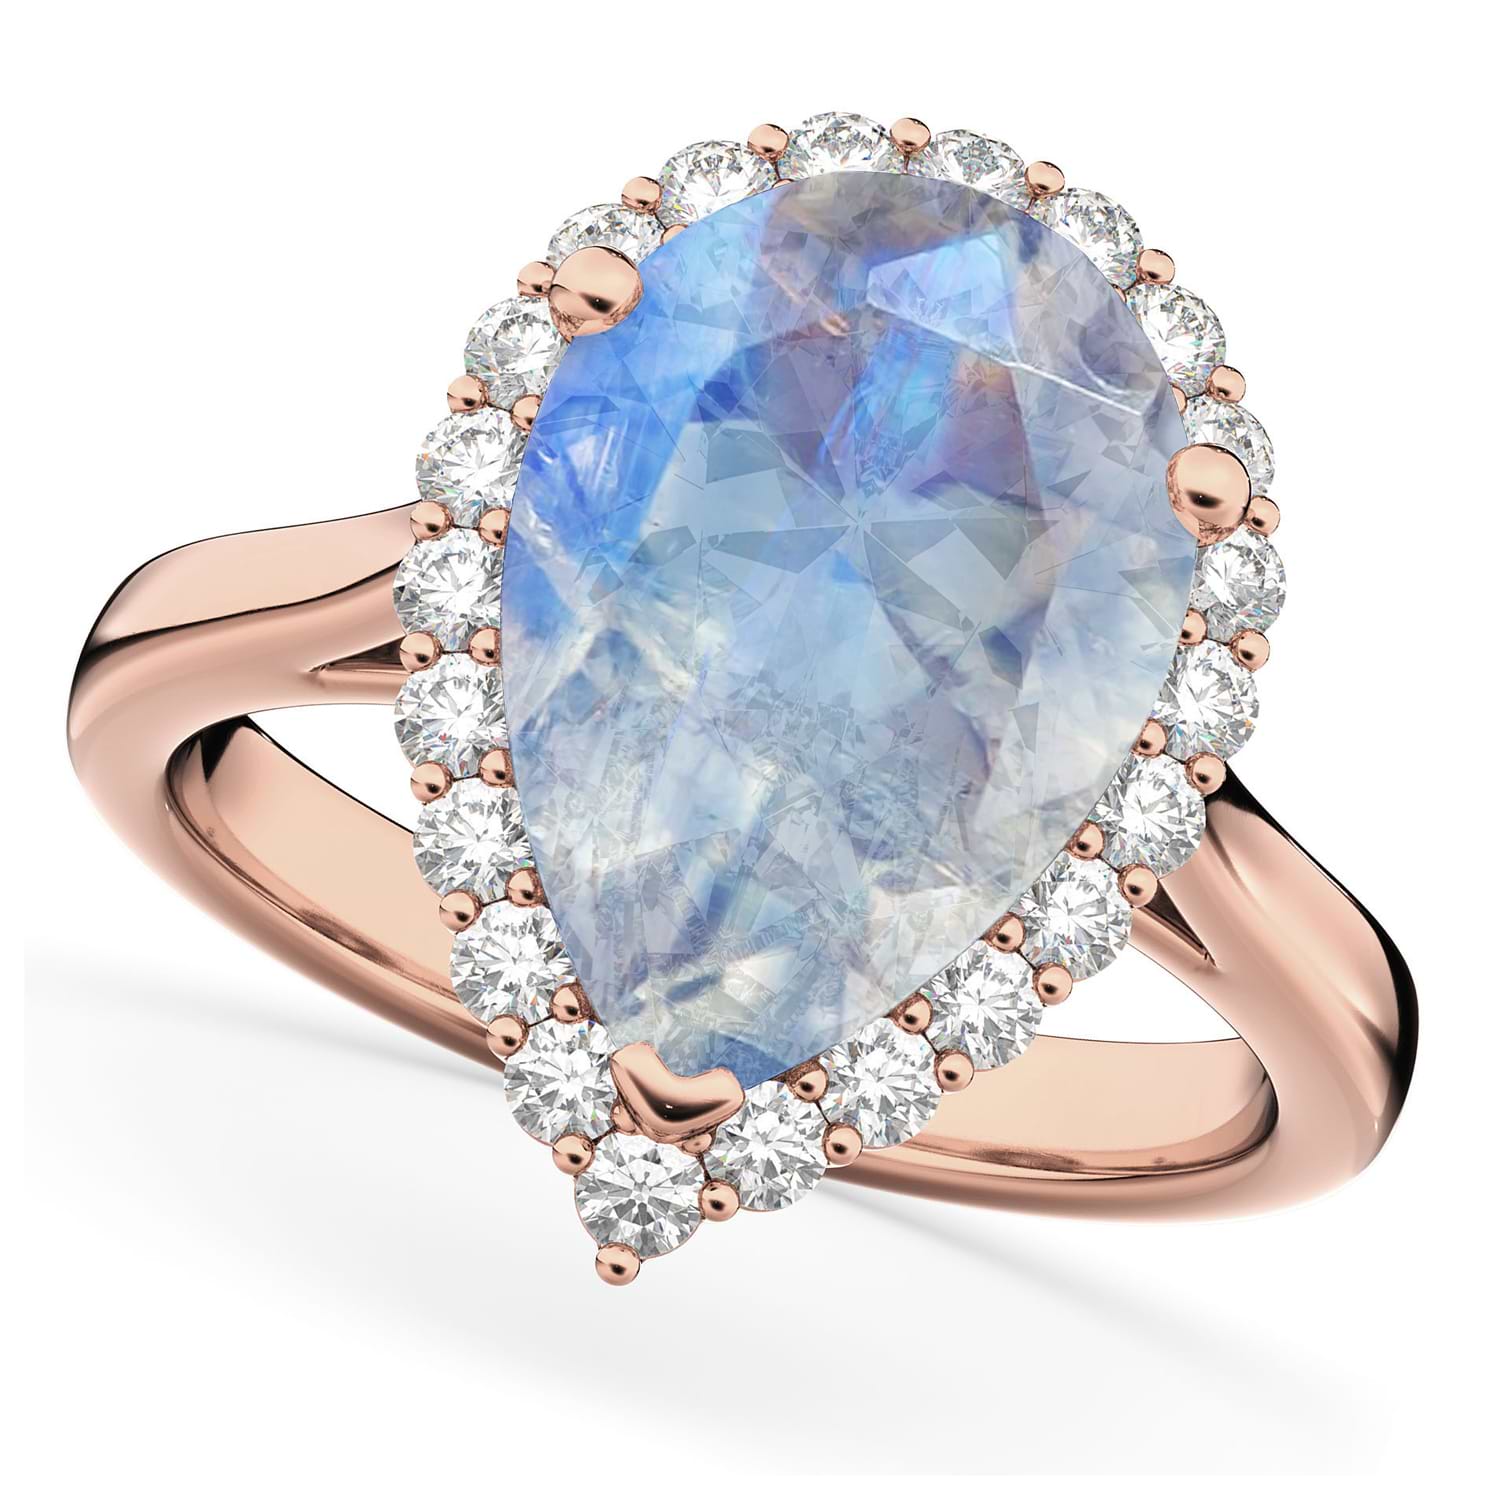 Pear Cut Halo Moonstone & Diamond Engagement Ring 14K Rose Gold 4.69ct